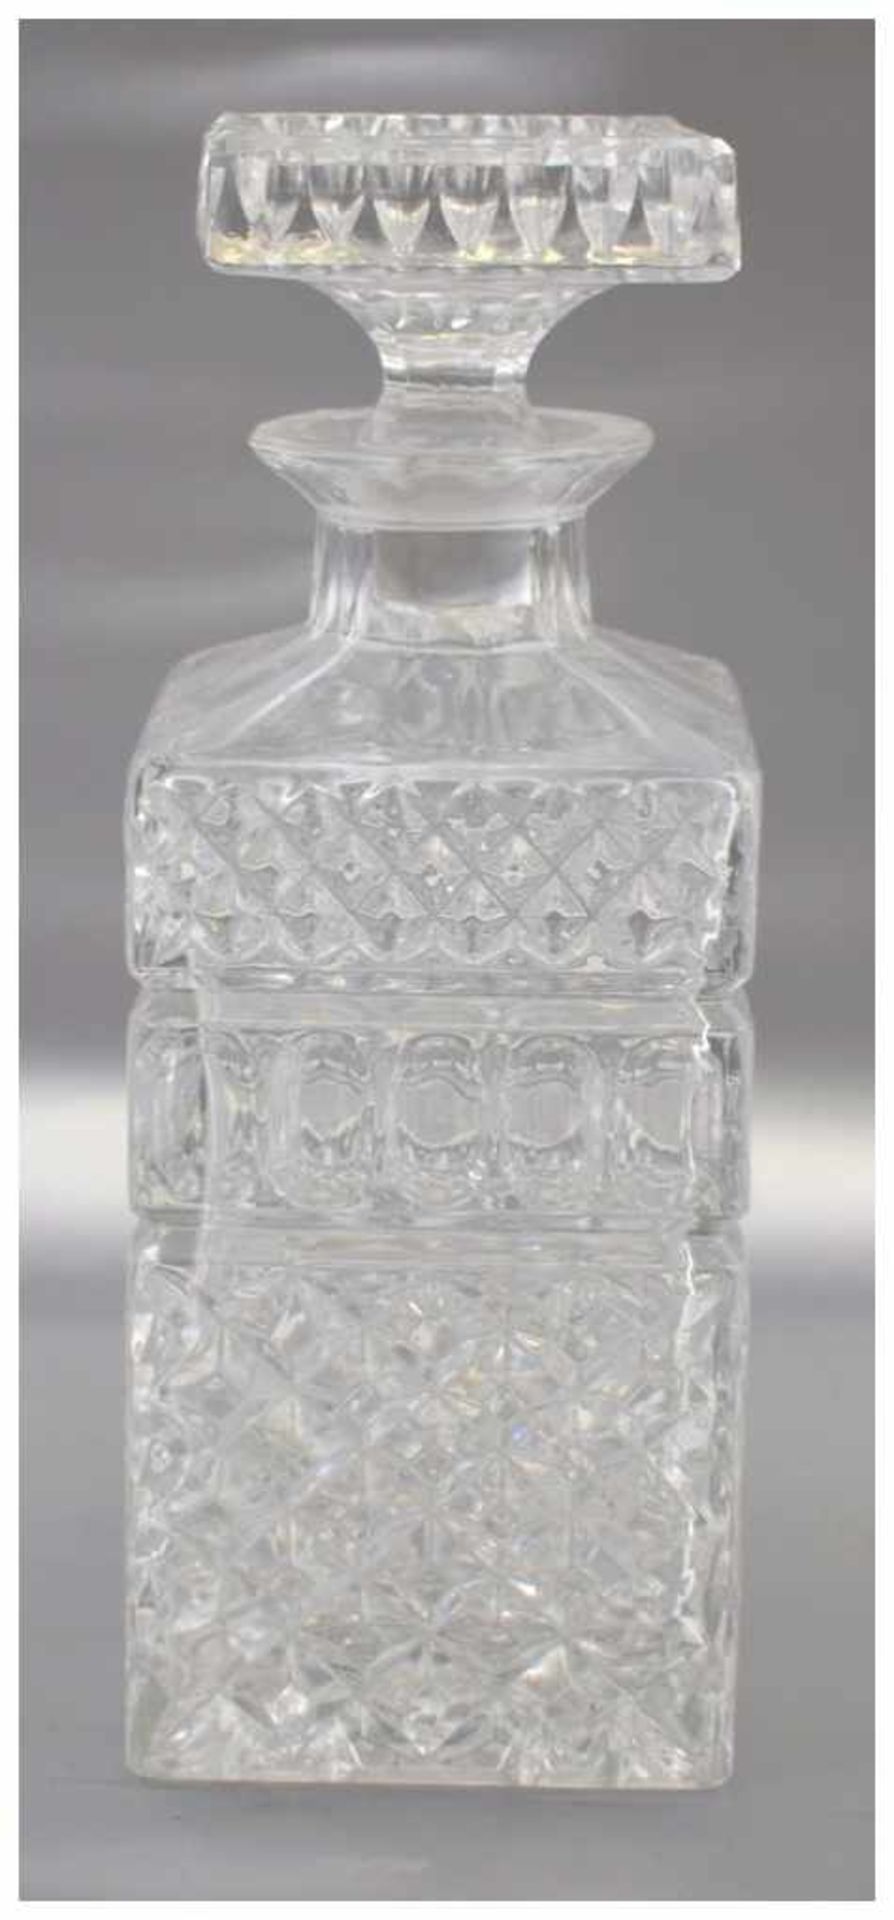 Karaffe farbl. Glas, geschliffen verziert, rechteckig, mit Stöpsel, H 24 cm